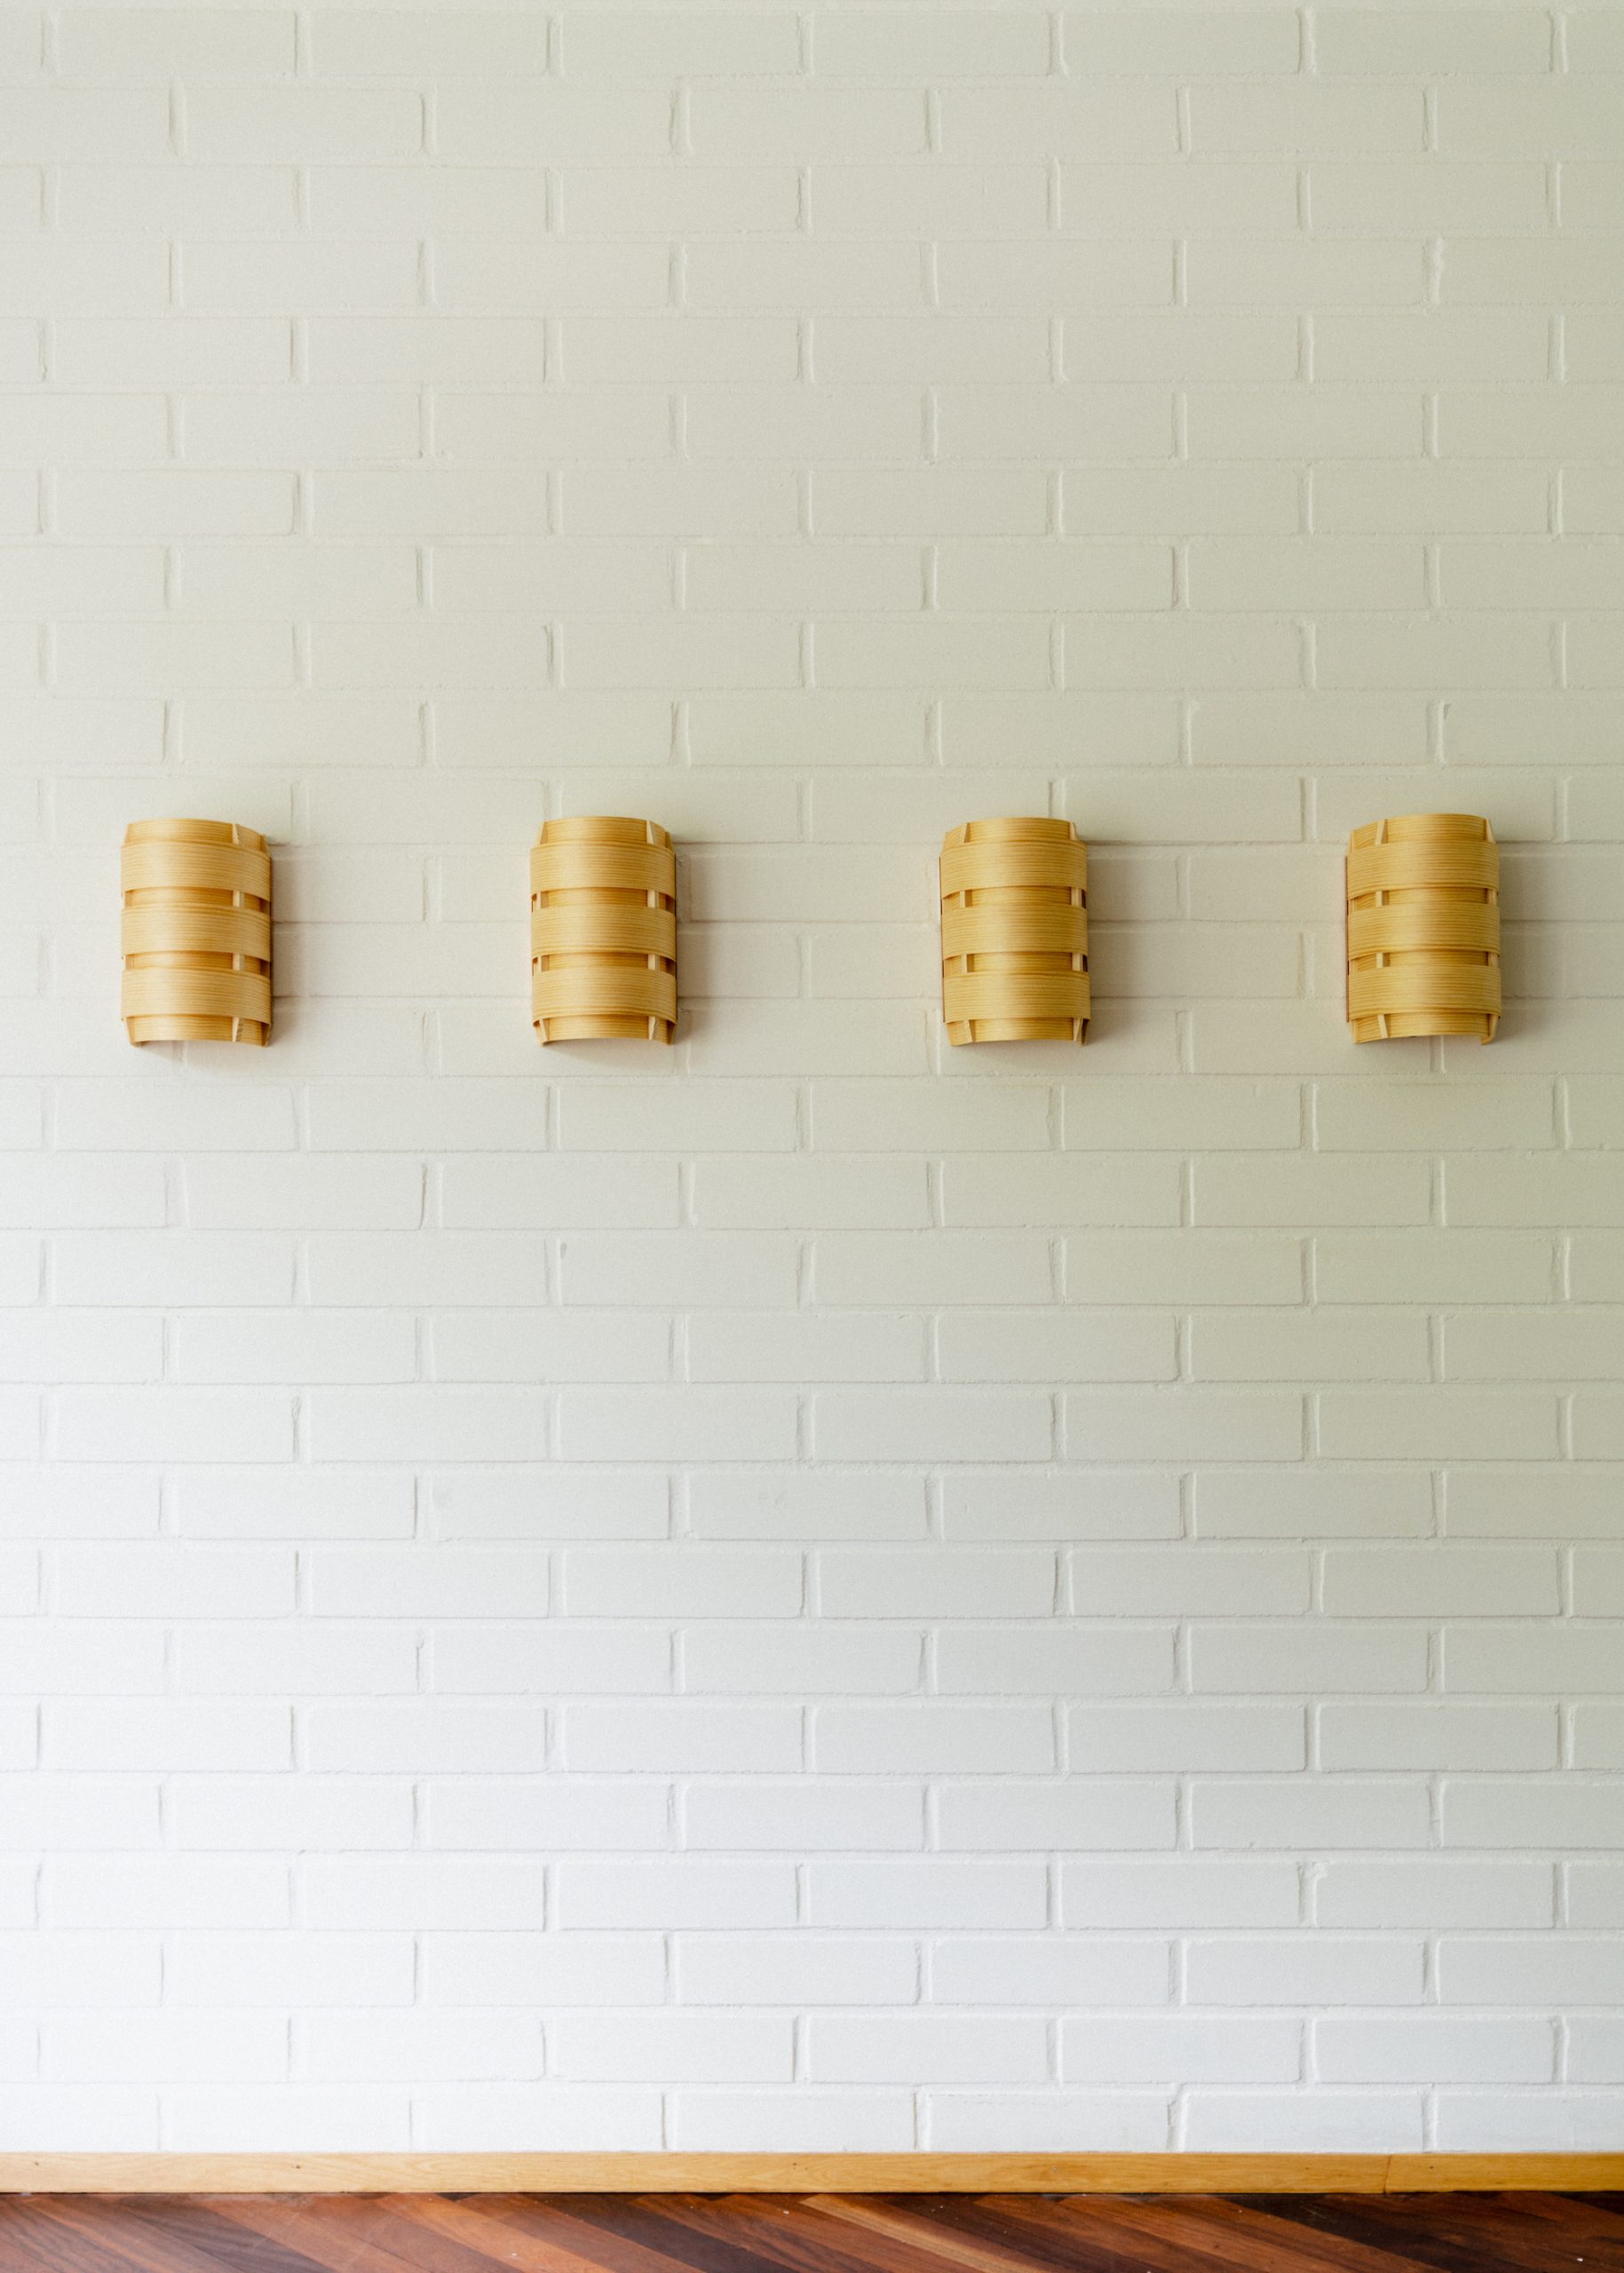 Wall lights made of pine